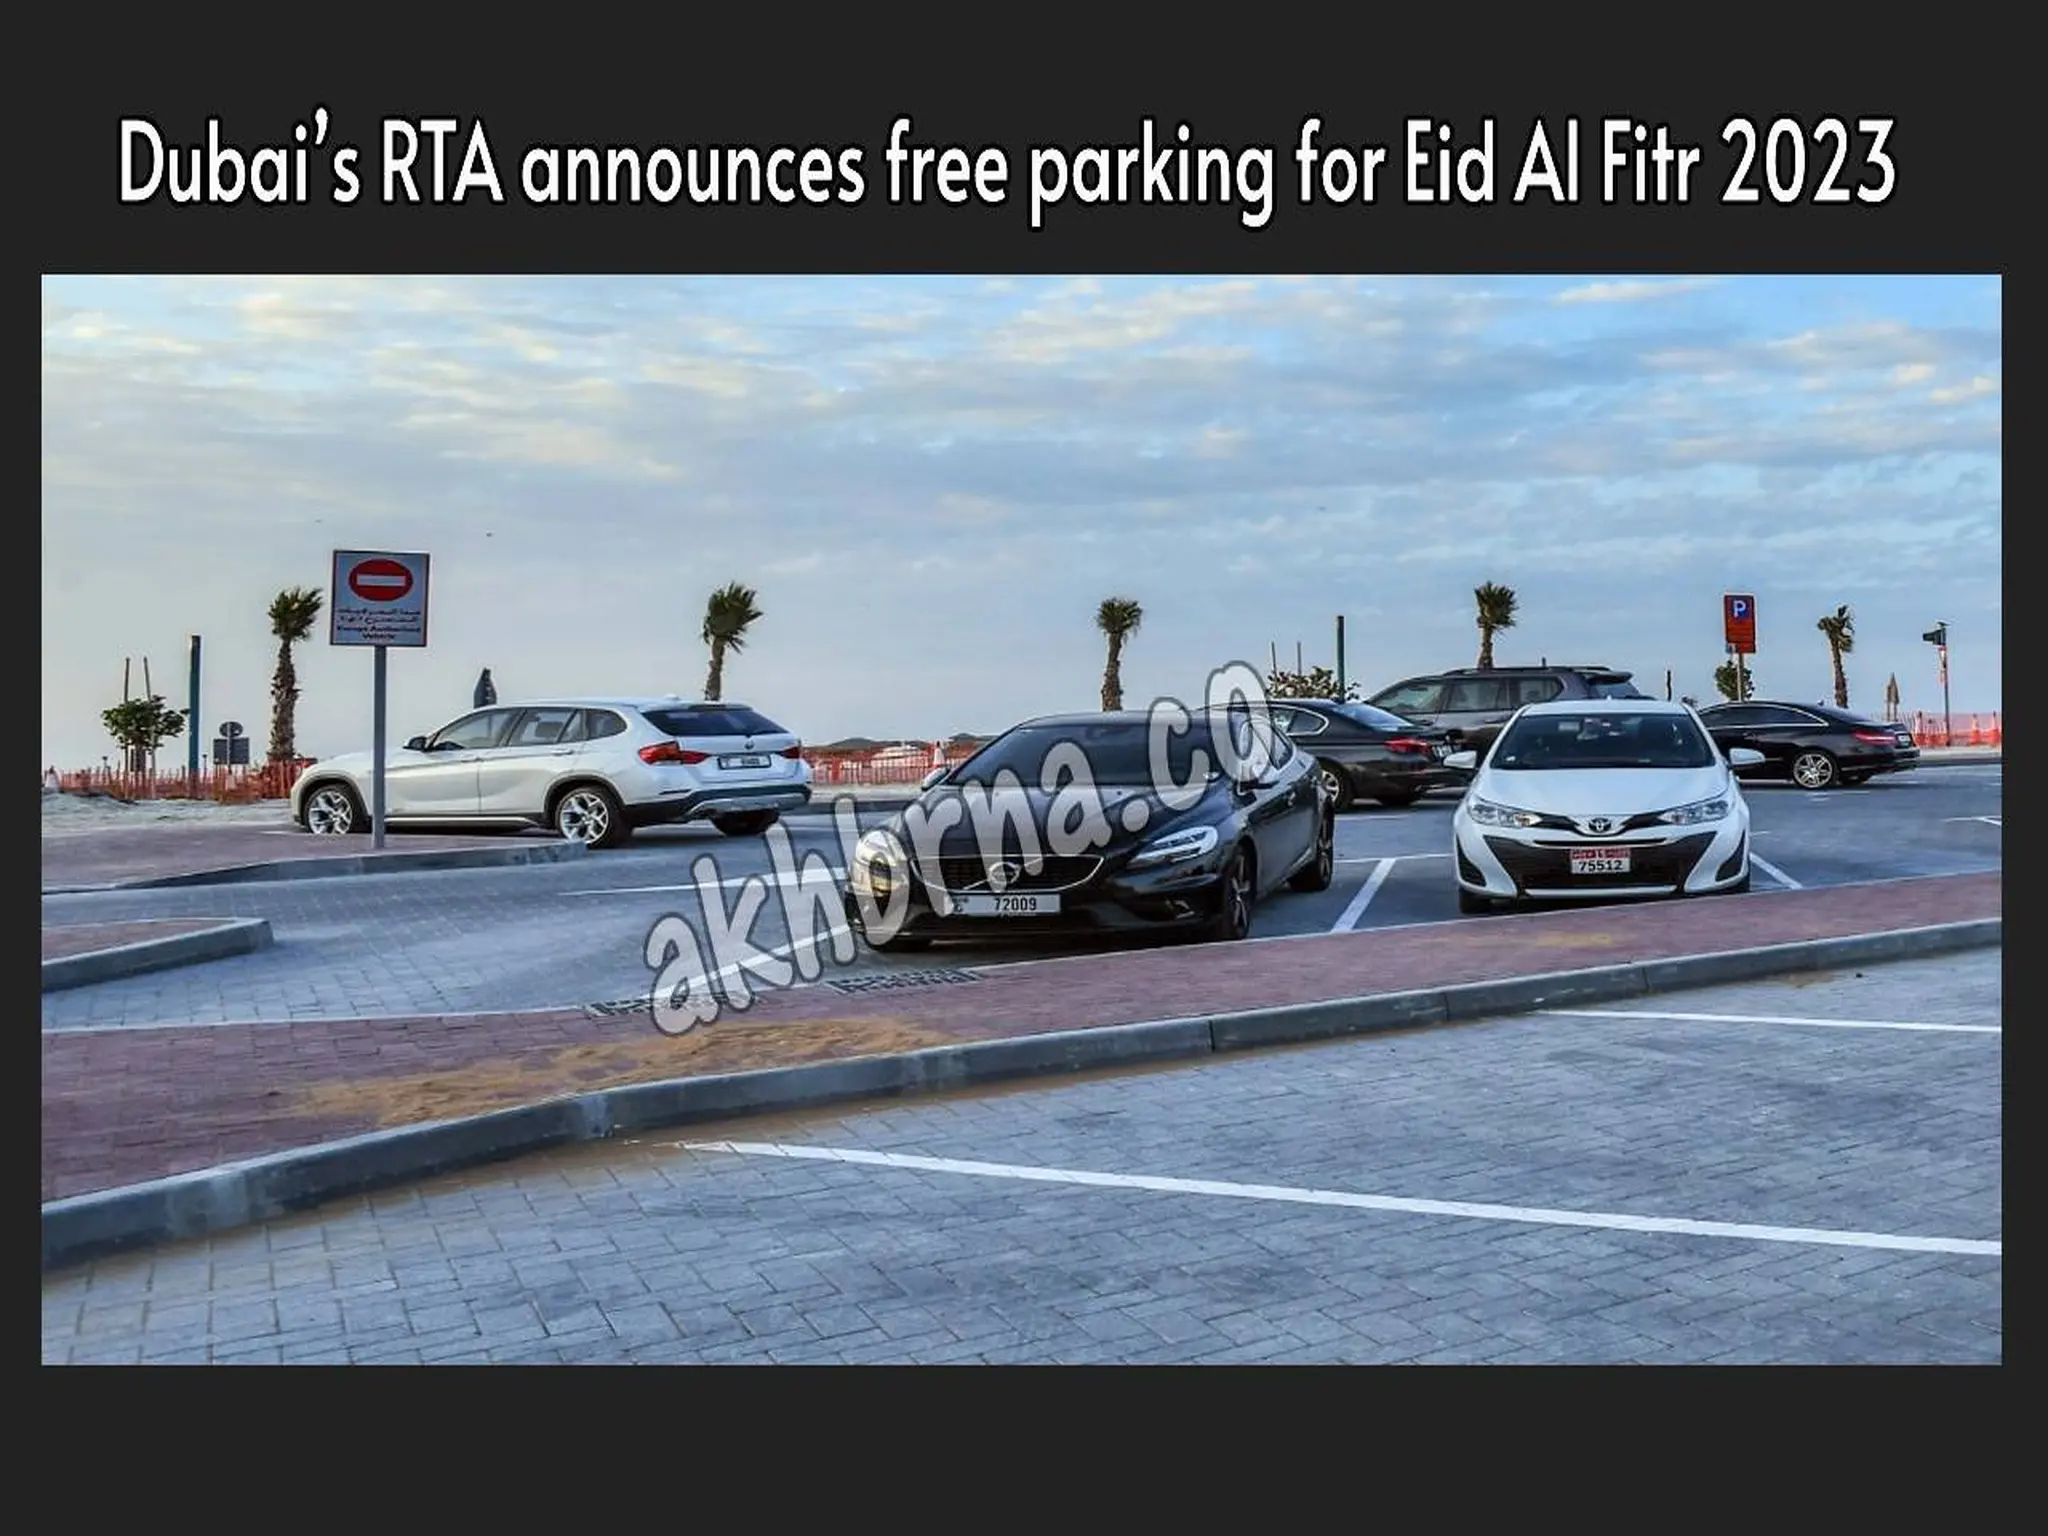 Dubai’s RTA announces free parking for Eid Al Fitr 2023 holiday